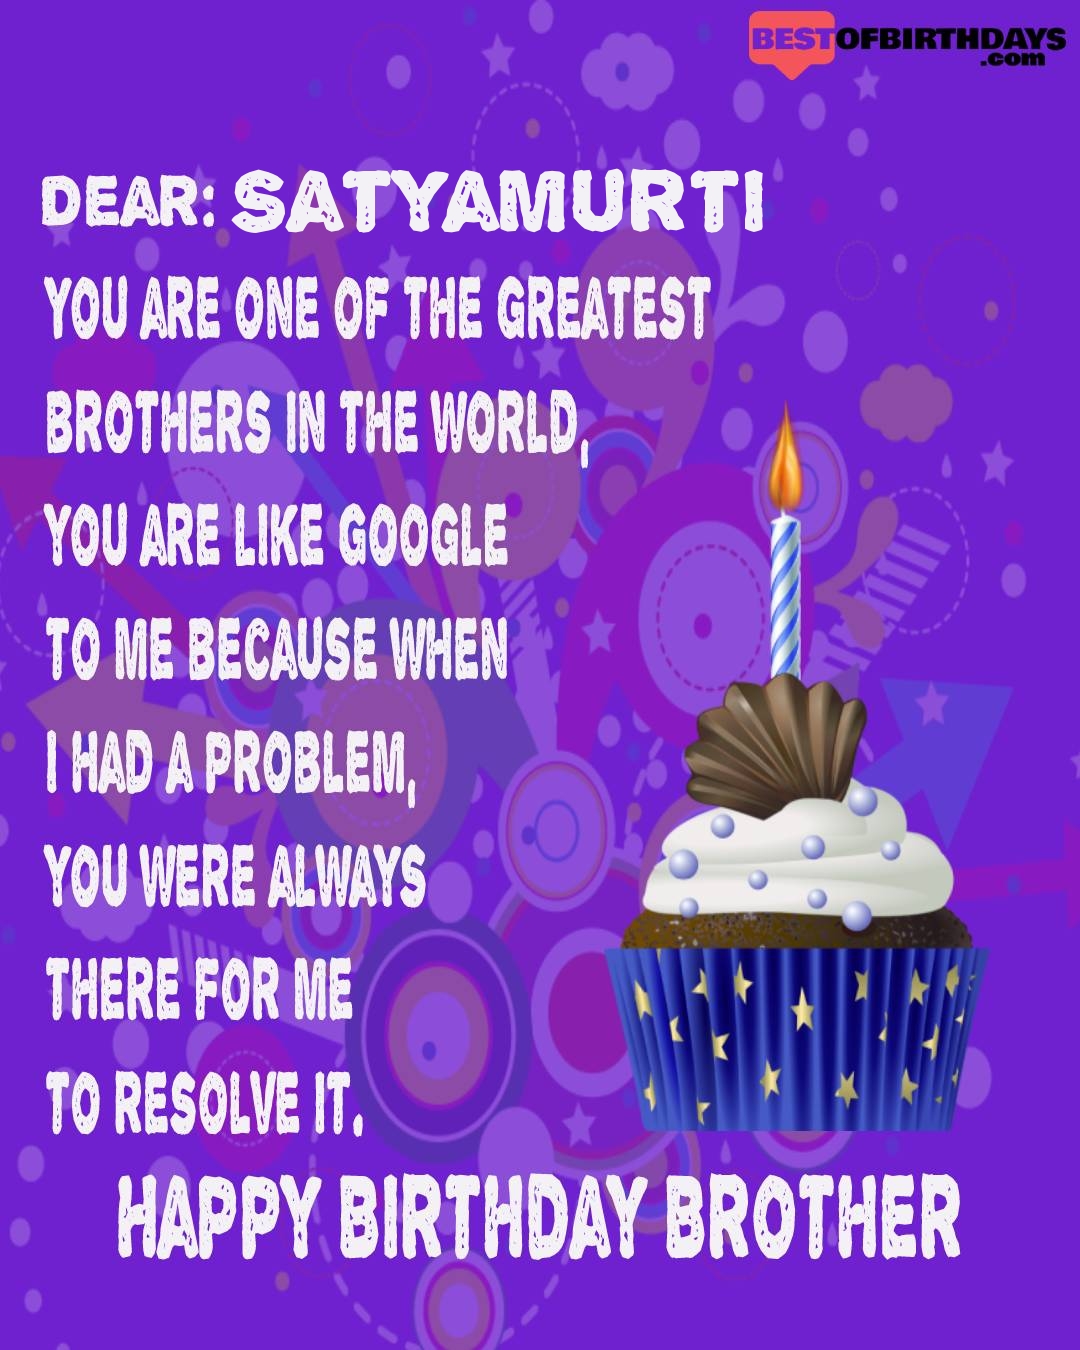 Happy birthday satyamurti bhai brother bro